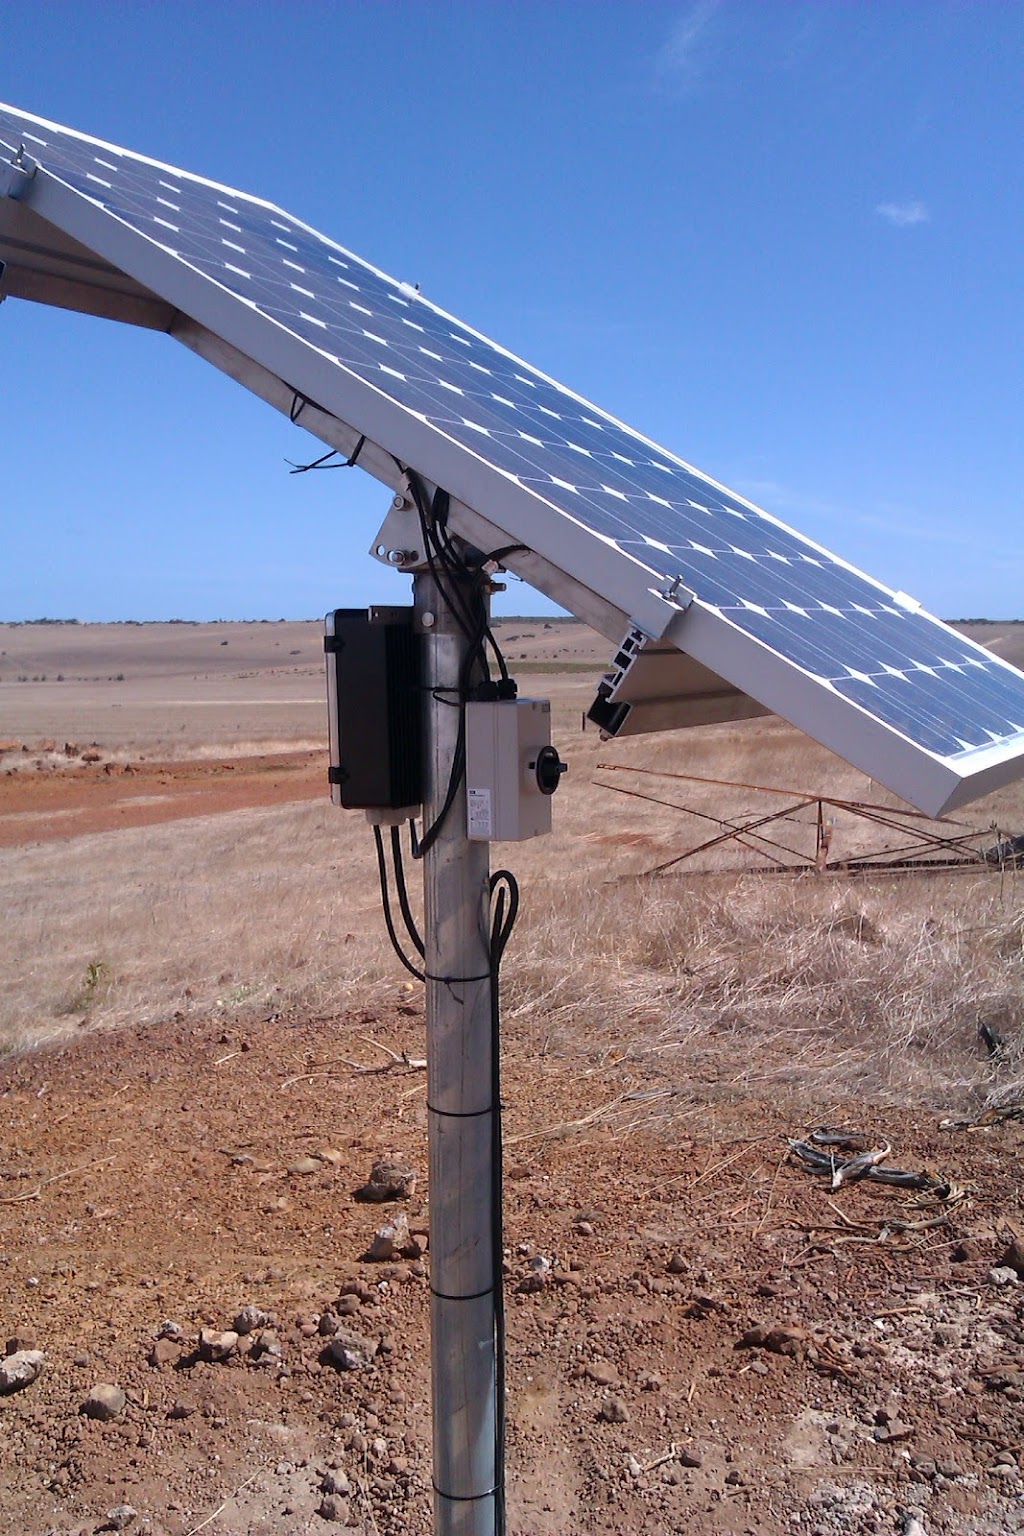 Coastal Electrical and Solar | 9 Ranch Ct, Kalbarri WA 6536, Australia | Phone: 0400 196 497